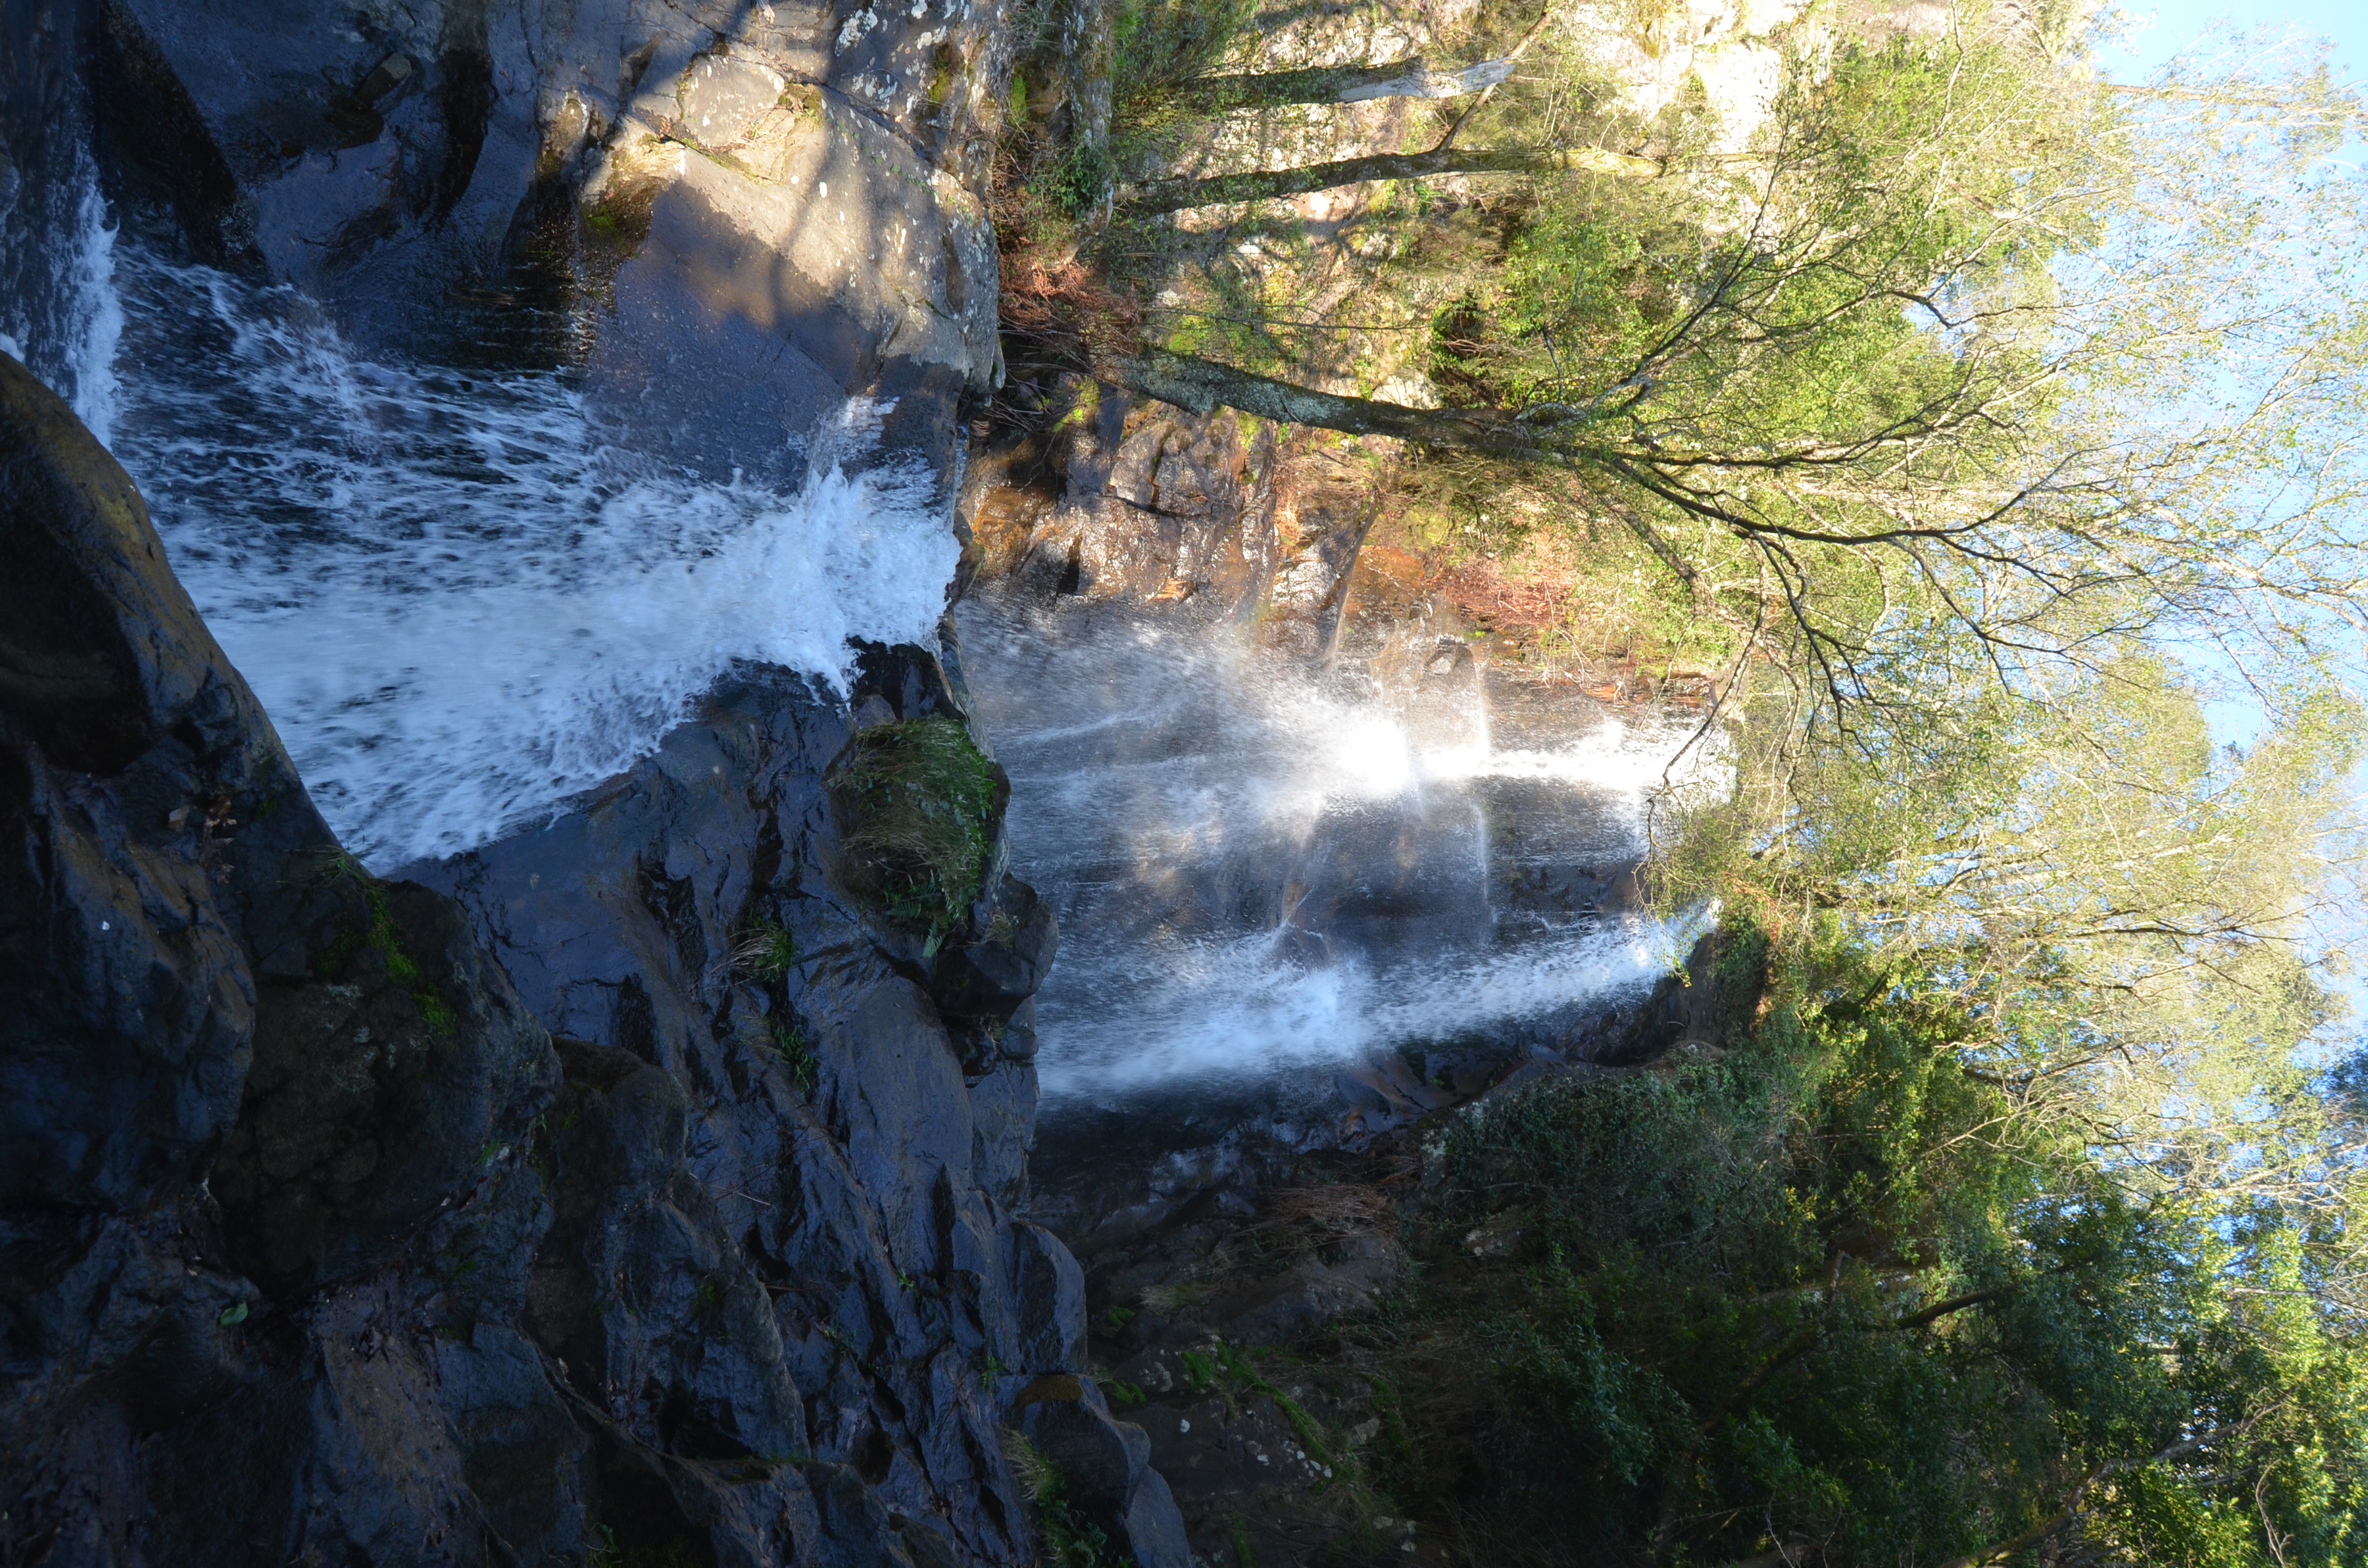 File:Study on a waterfall II (32735700194).jpg - Wikimedia Commons